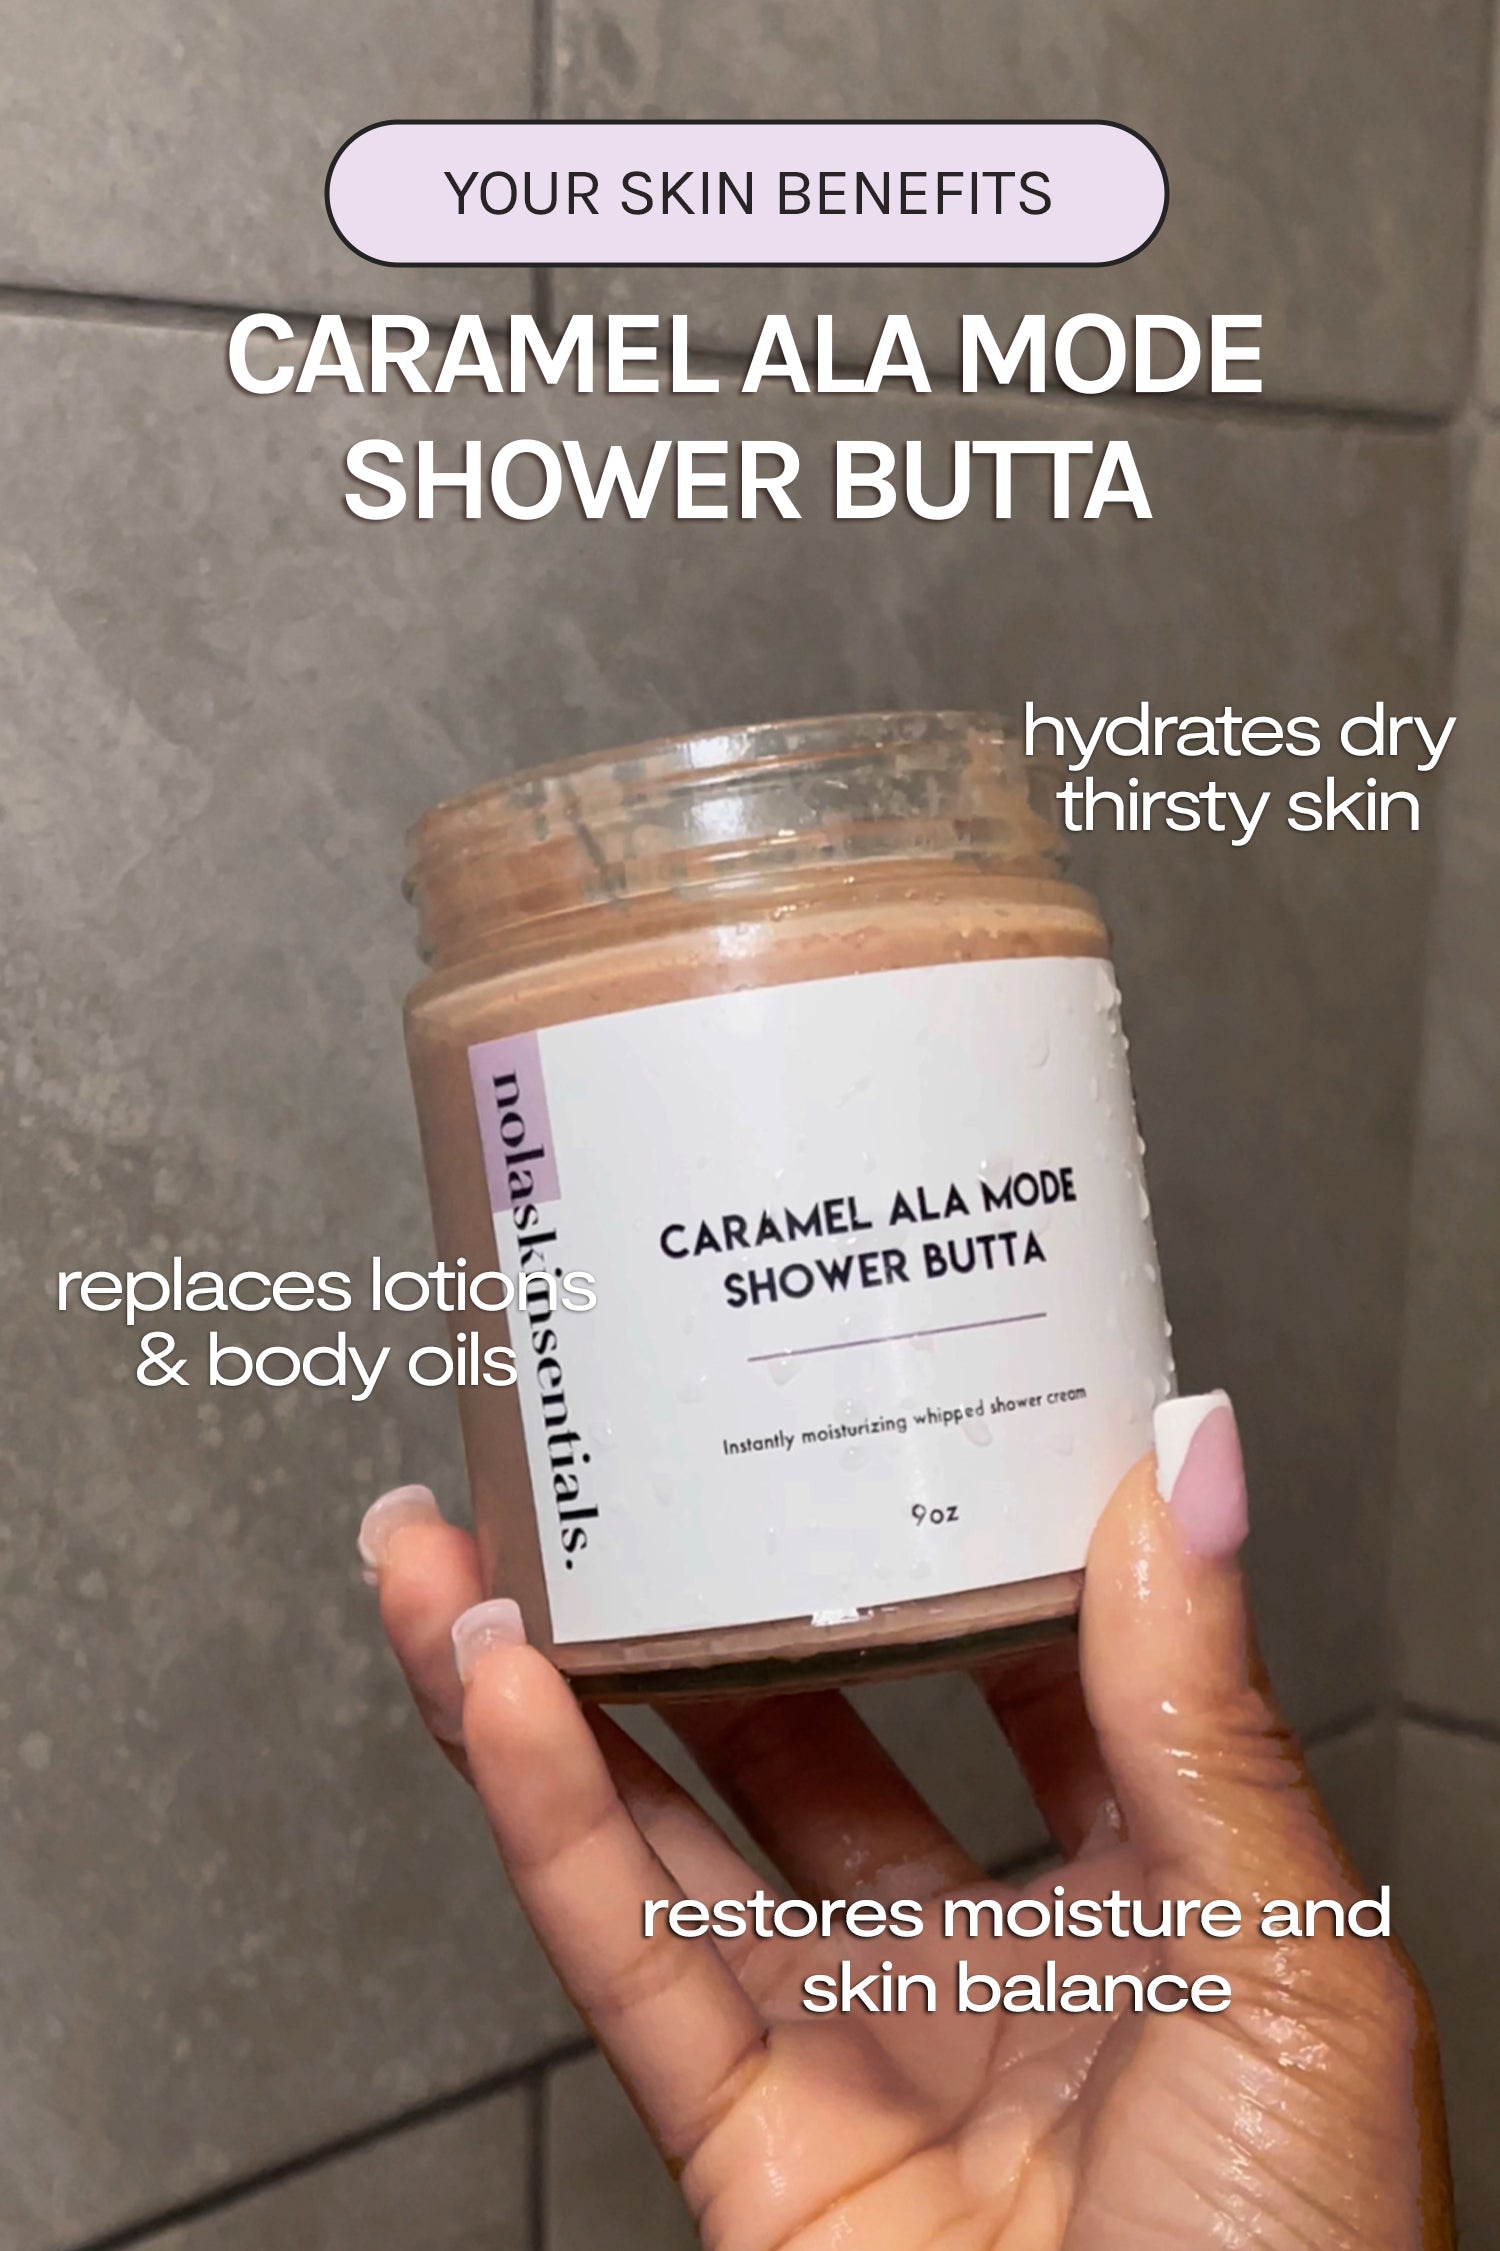 Caramel Ala Mode Shower Butta